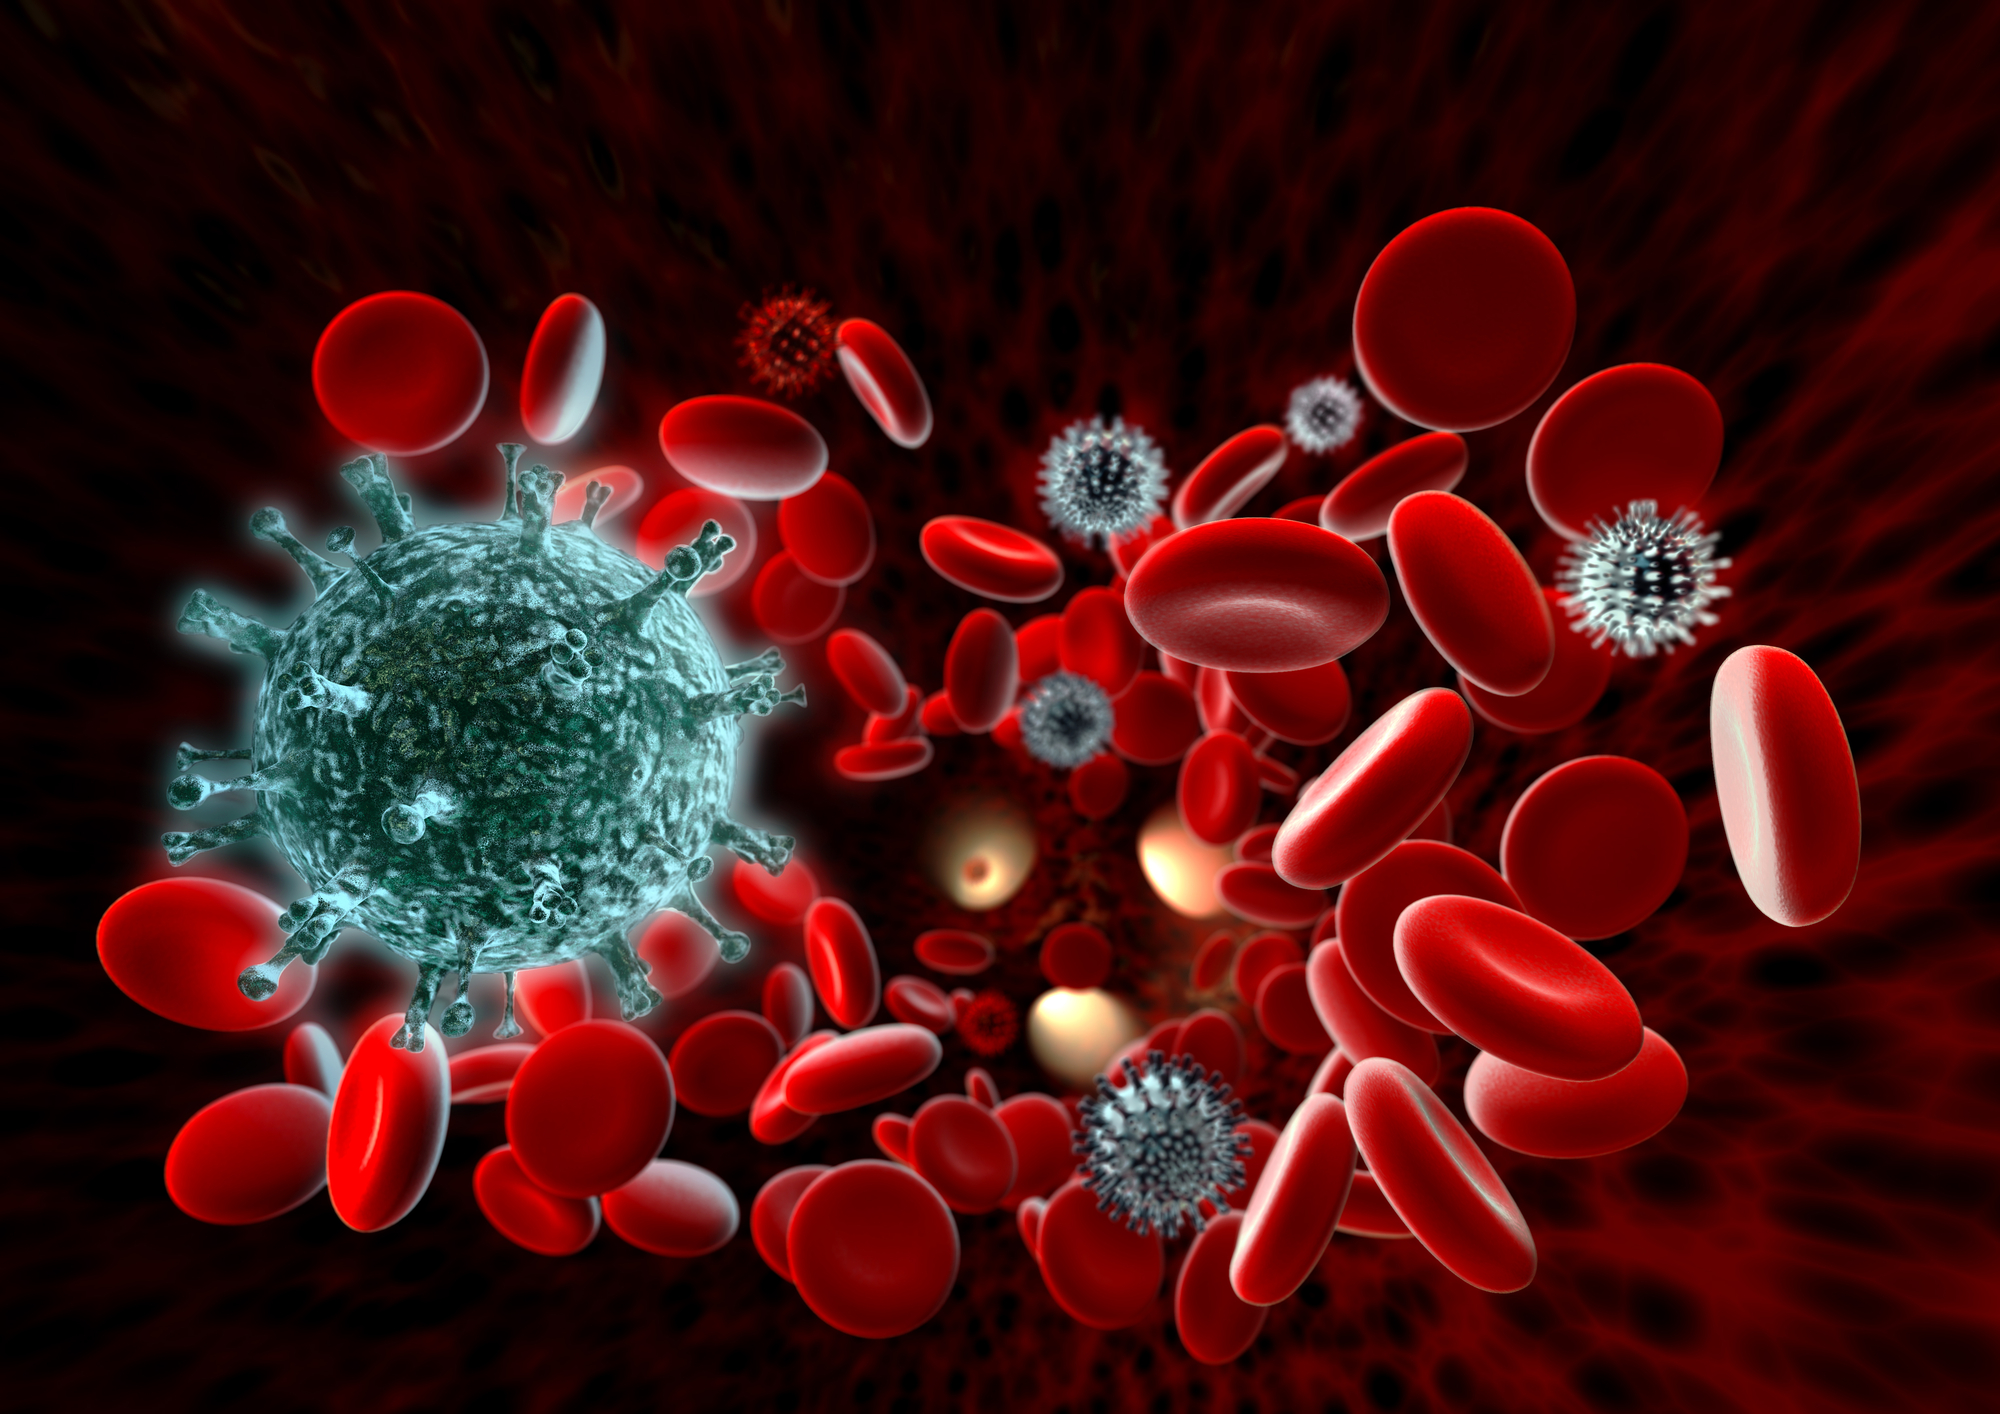 Thymosin Alpha 1 And Its Amazing Effects On Immunity